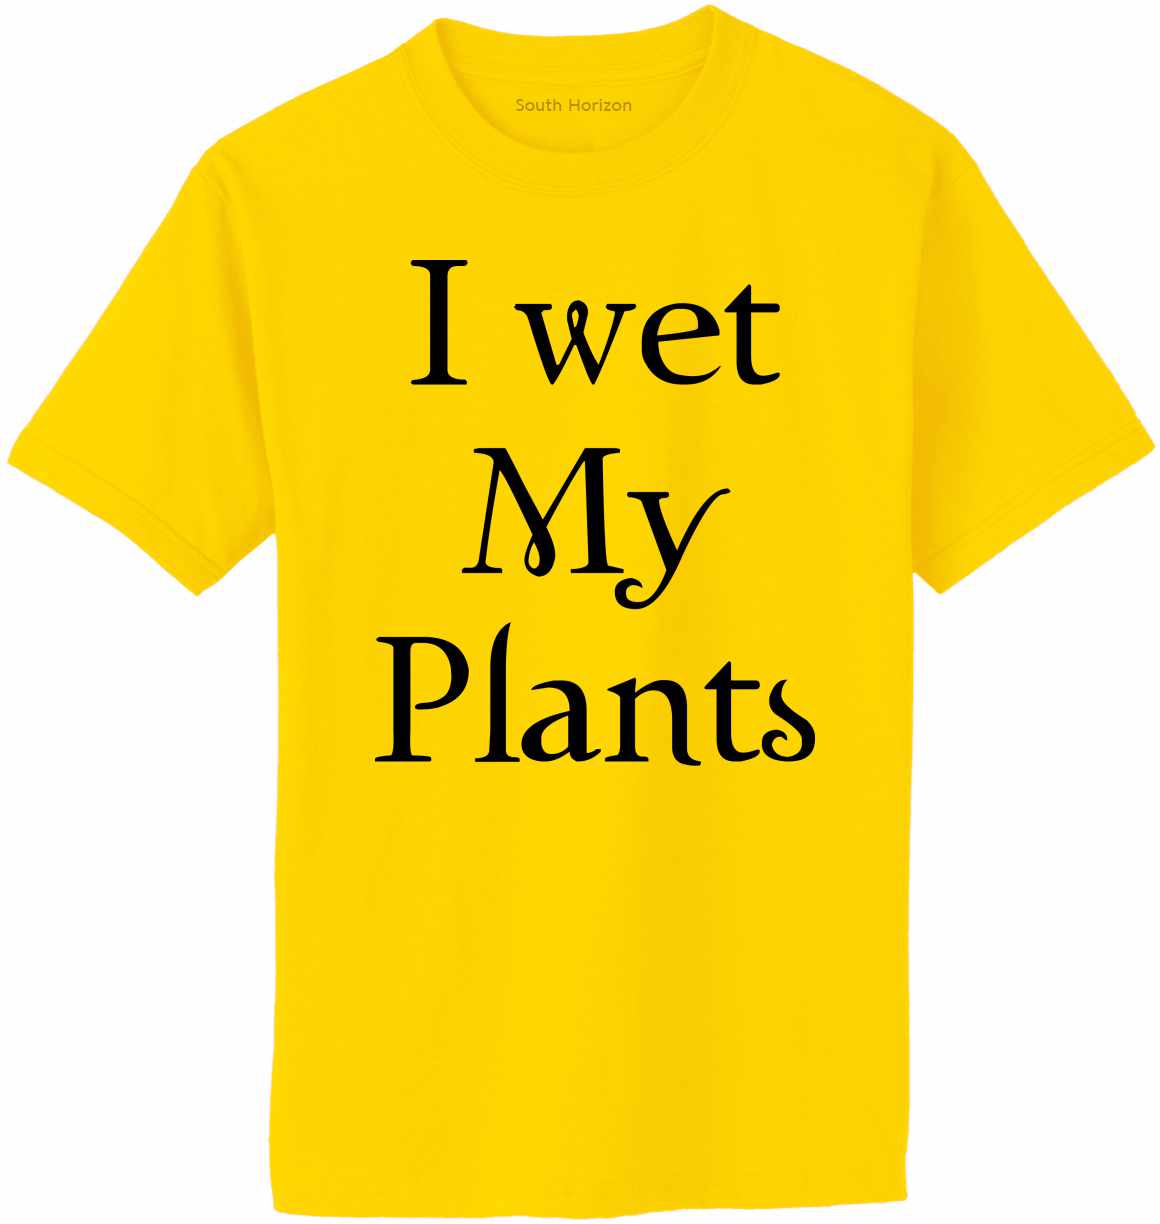 I Wet My Plants Adult T-Shirt